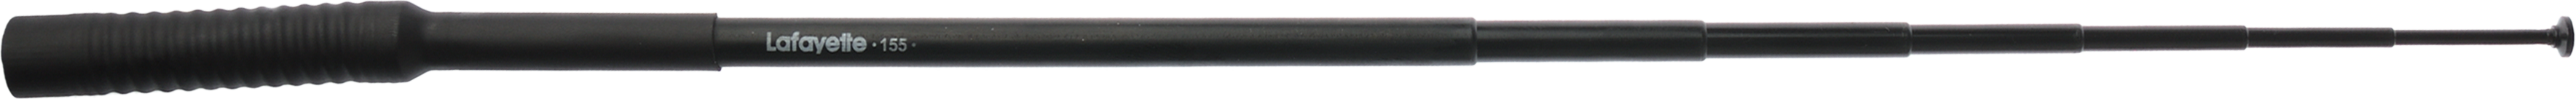 Lafayette Rod antenna 155 MHz Black OneSize, Black